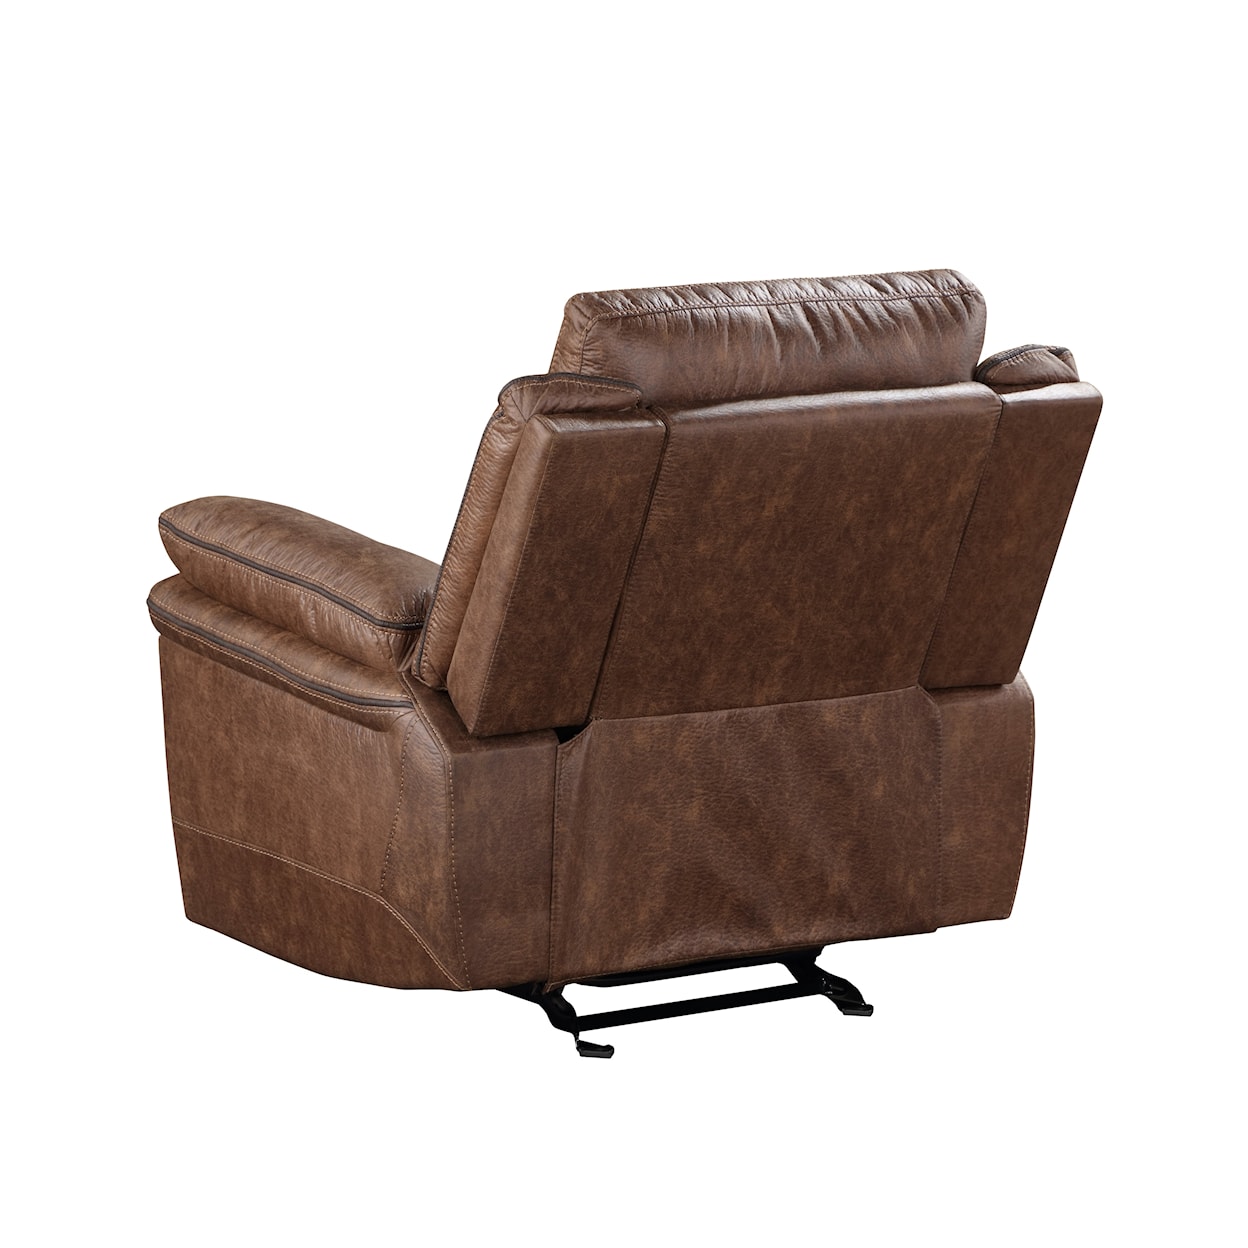 New Classic Furniture Ryland Recliner